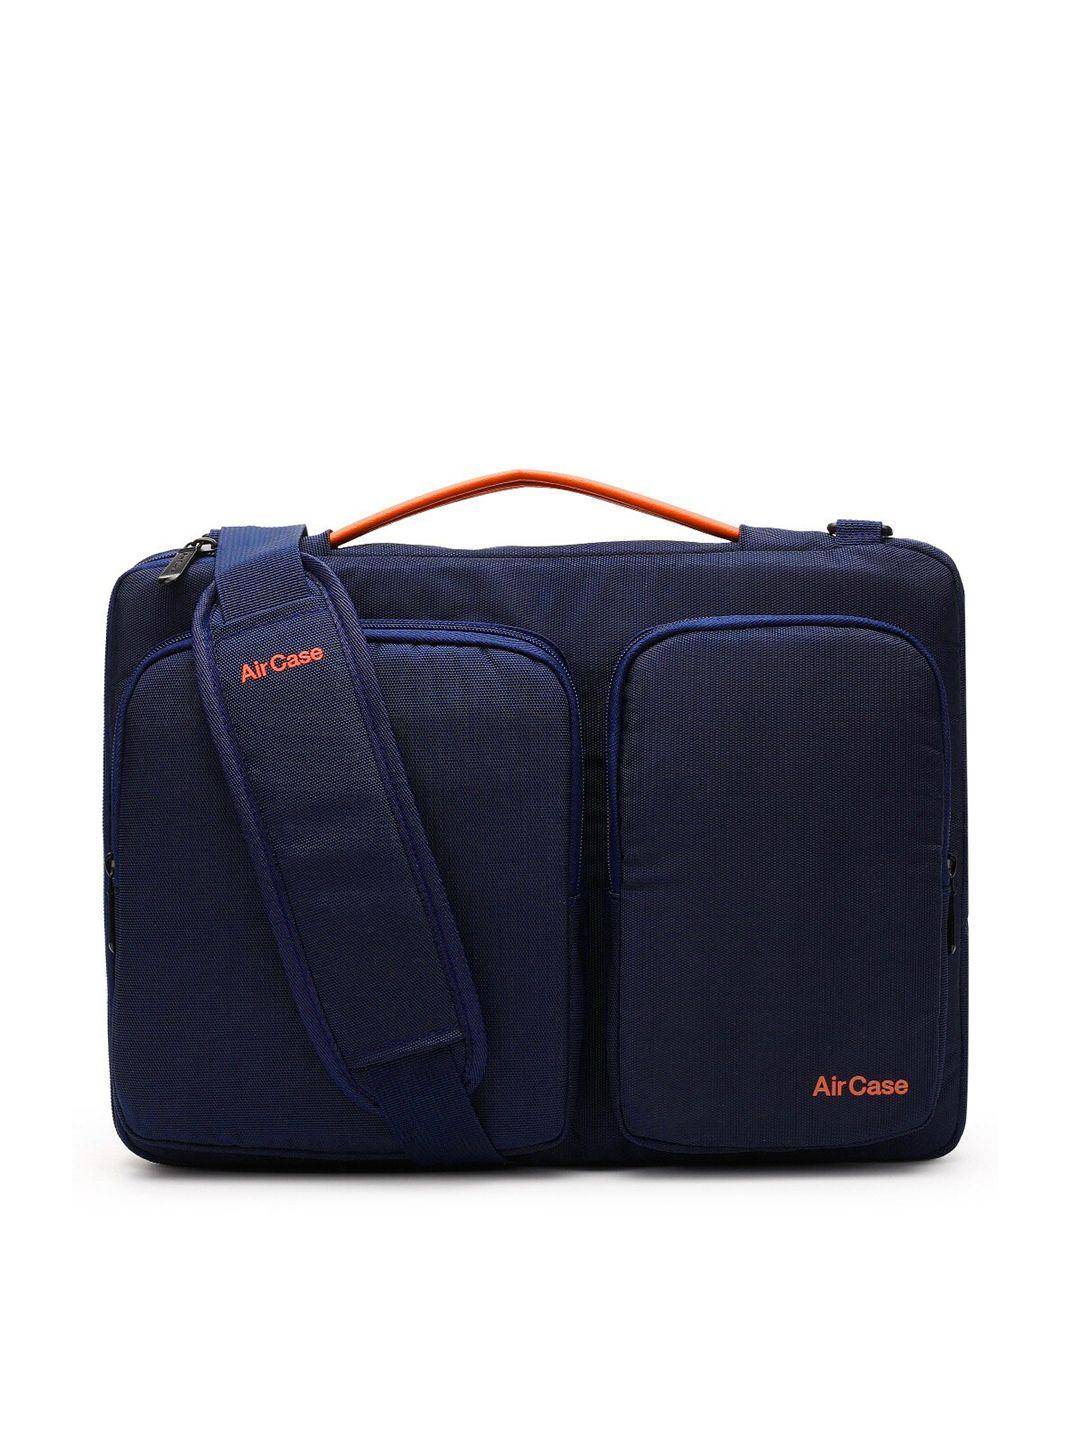 aircase unisex blue 15.6 inch messenger laptop bag with shoulder strap